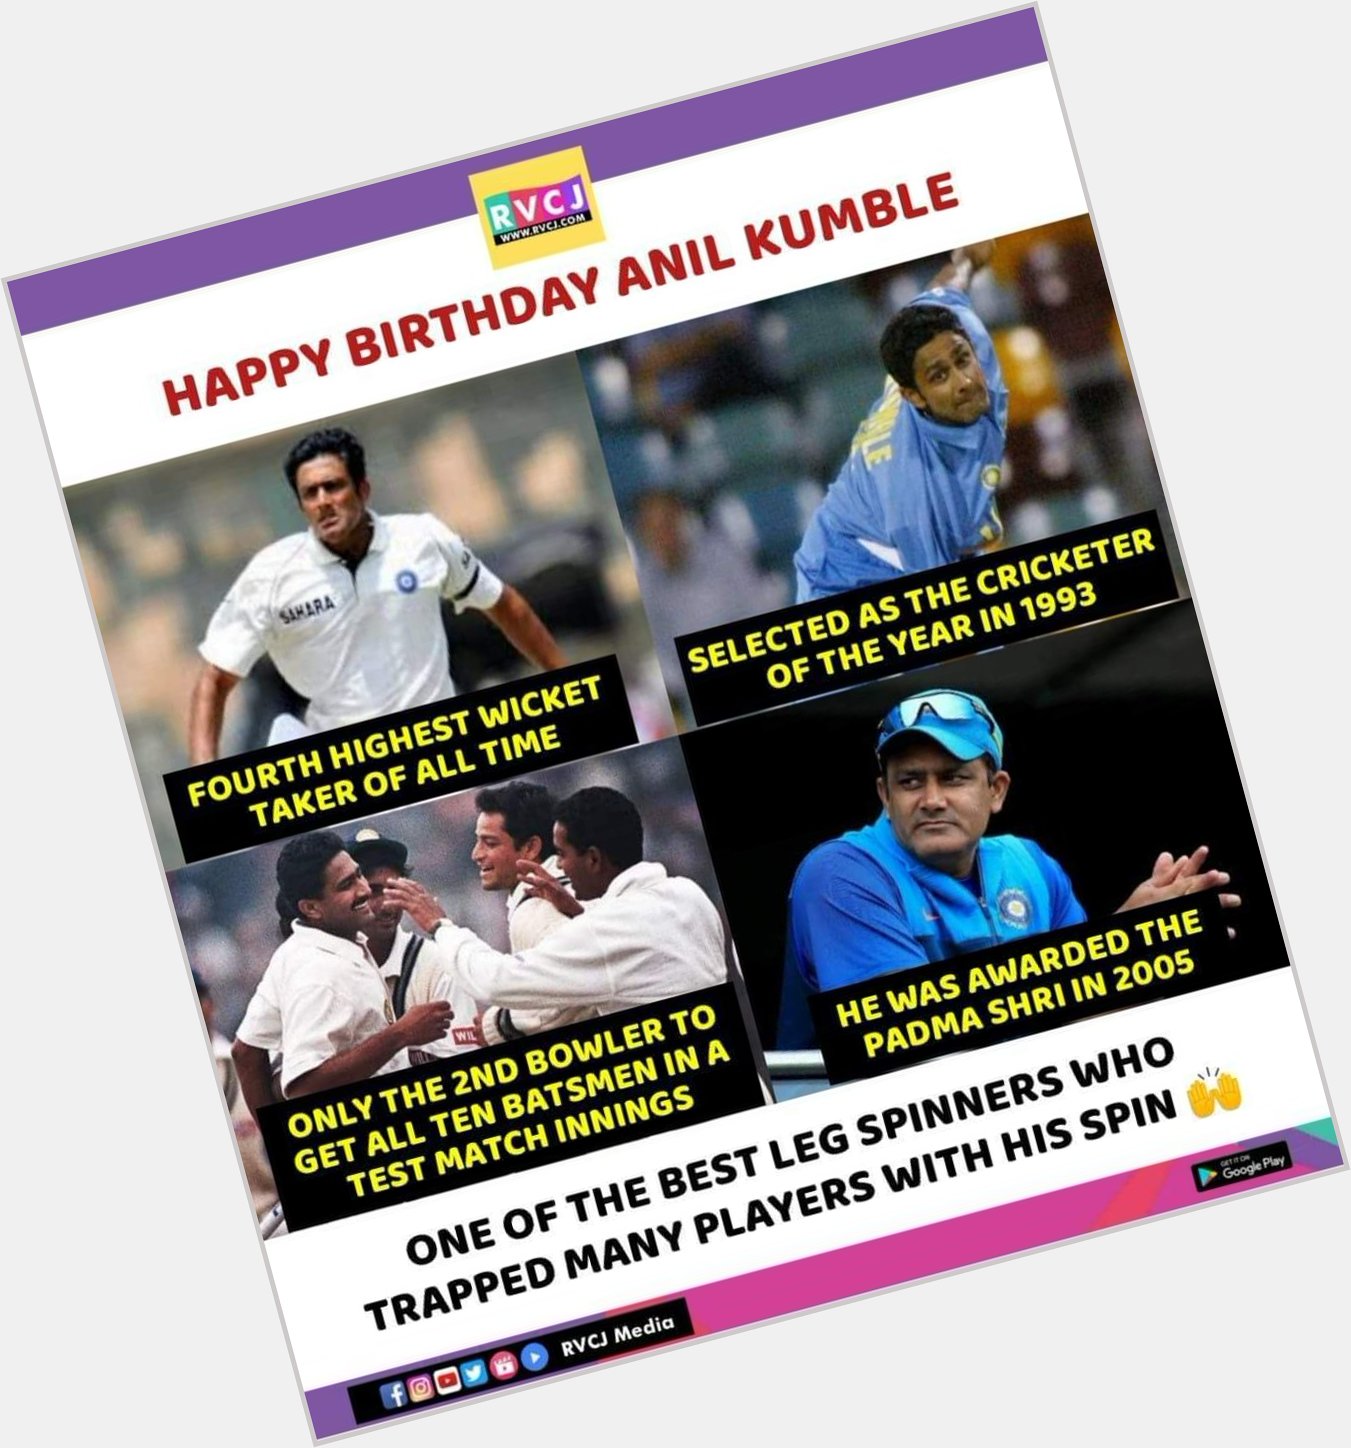 Happy Birthday day Anil kumble   